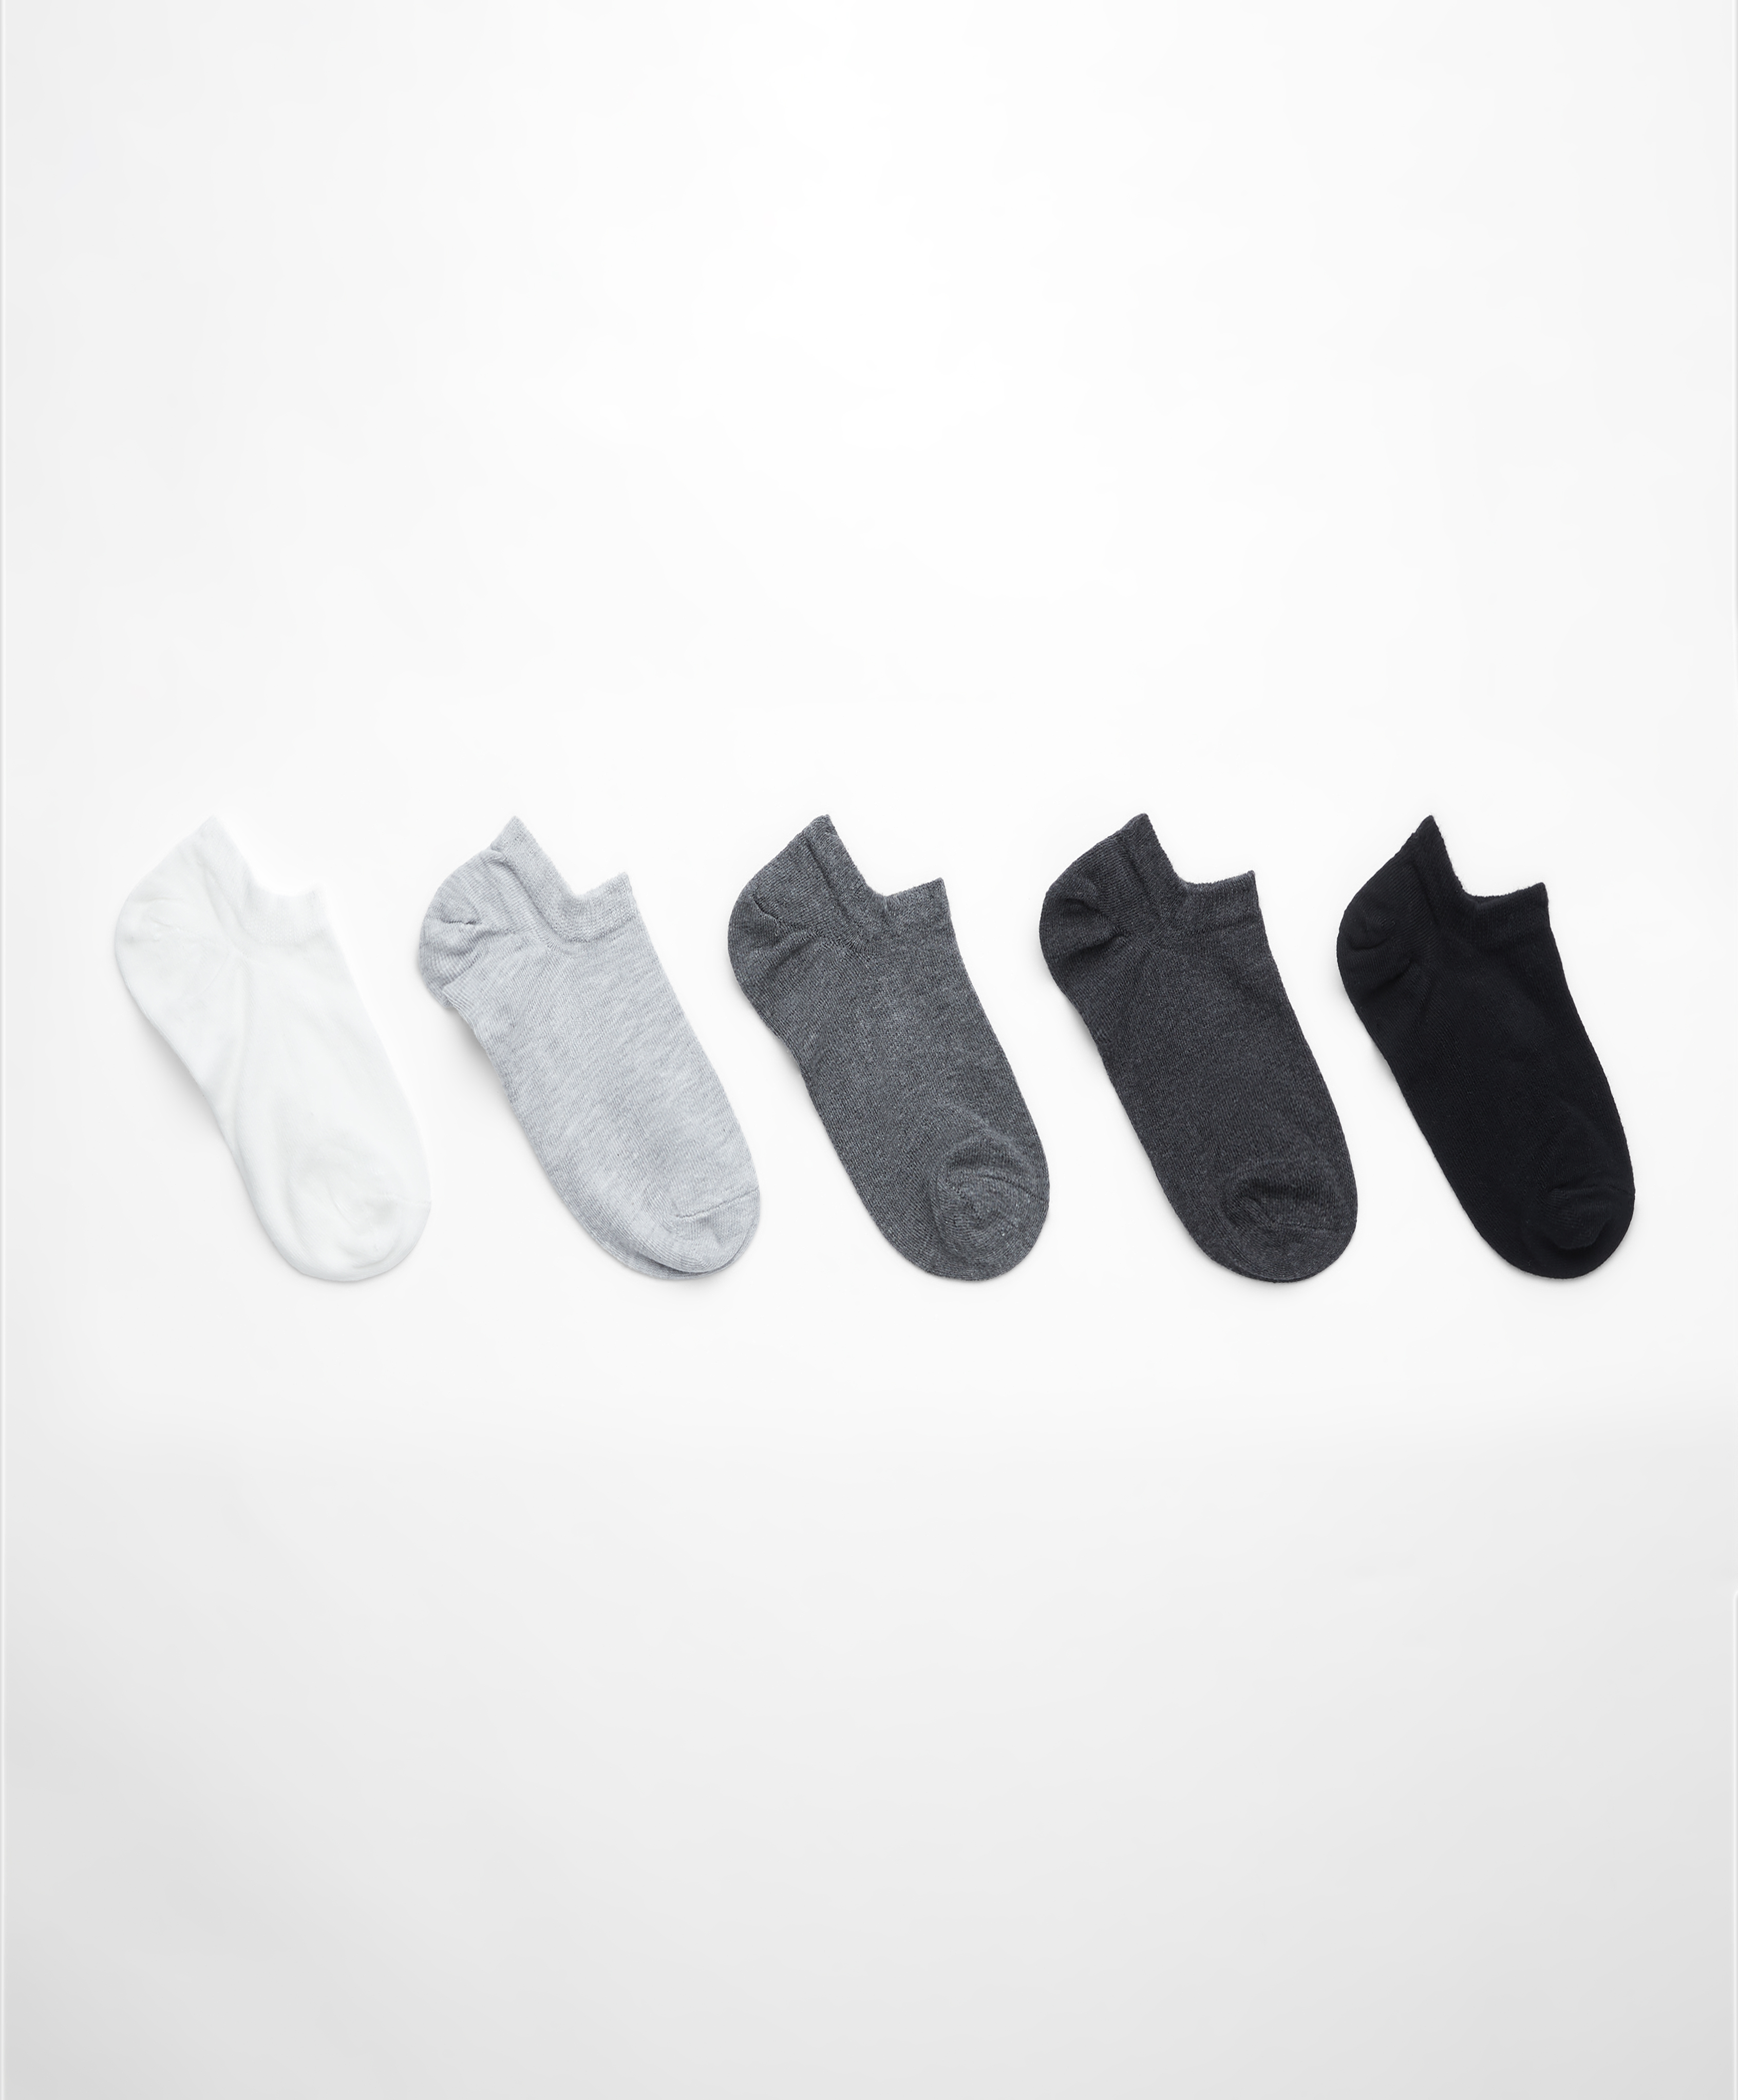 5 pairs of cotton trainer socks